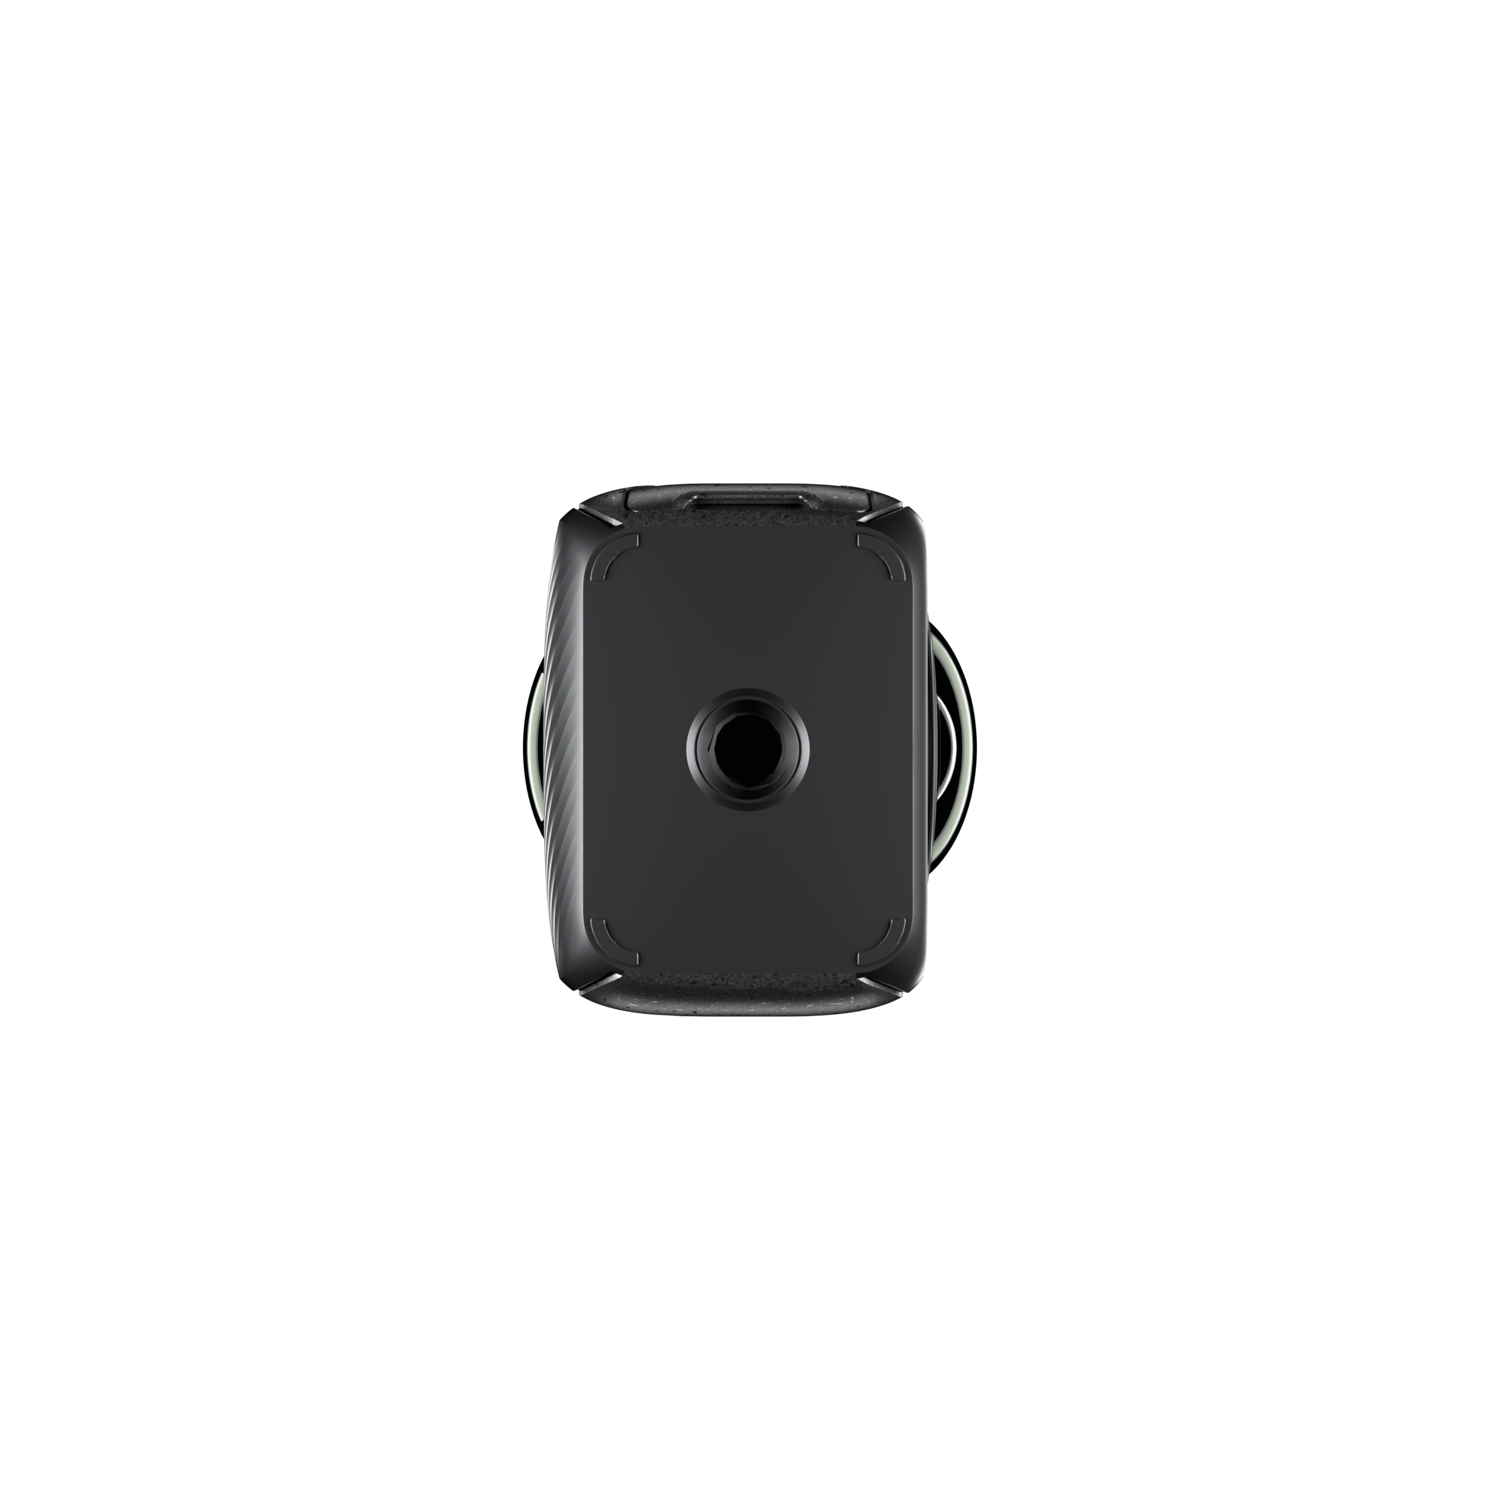 Экшн-камера Insta360 ONE RS 1-INCH 360